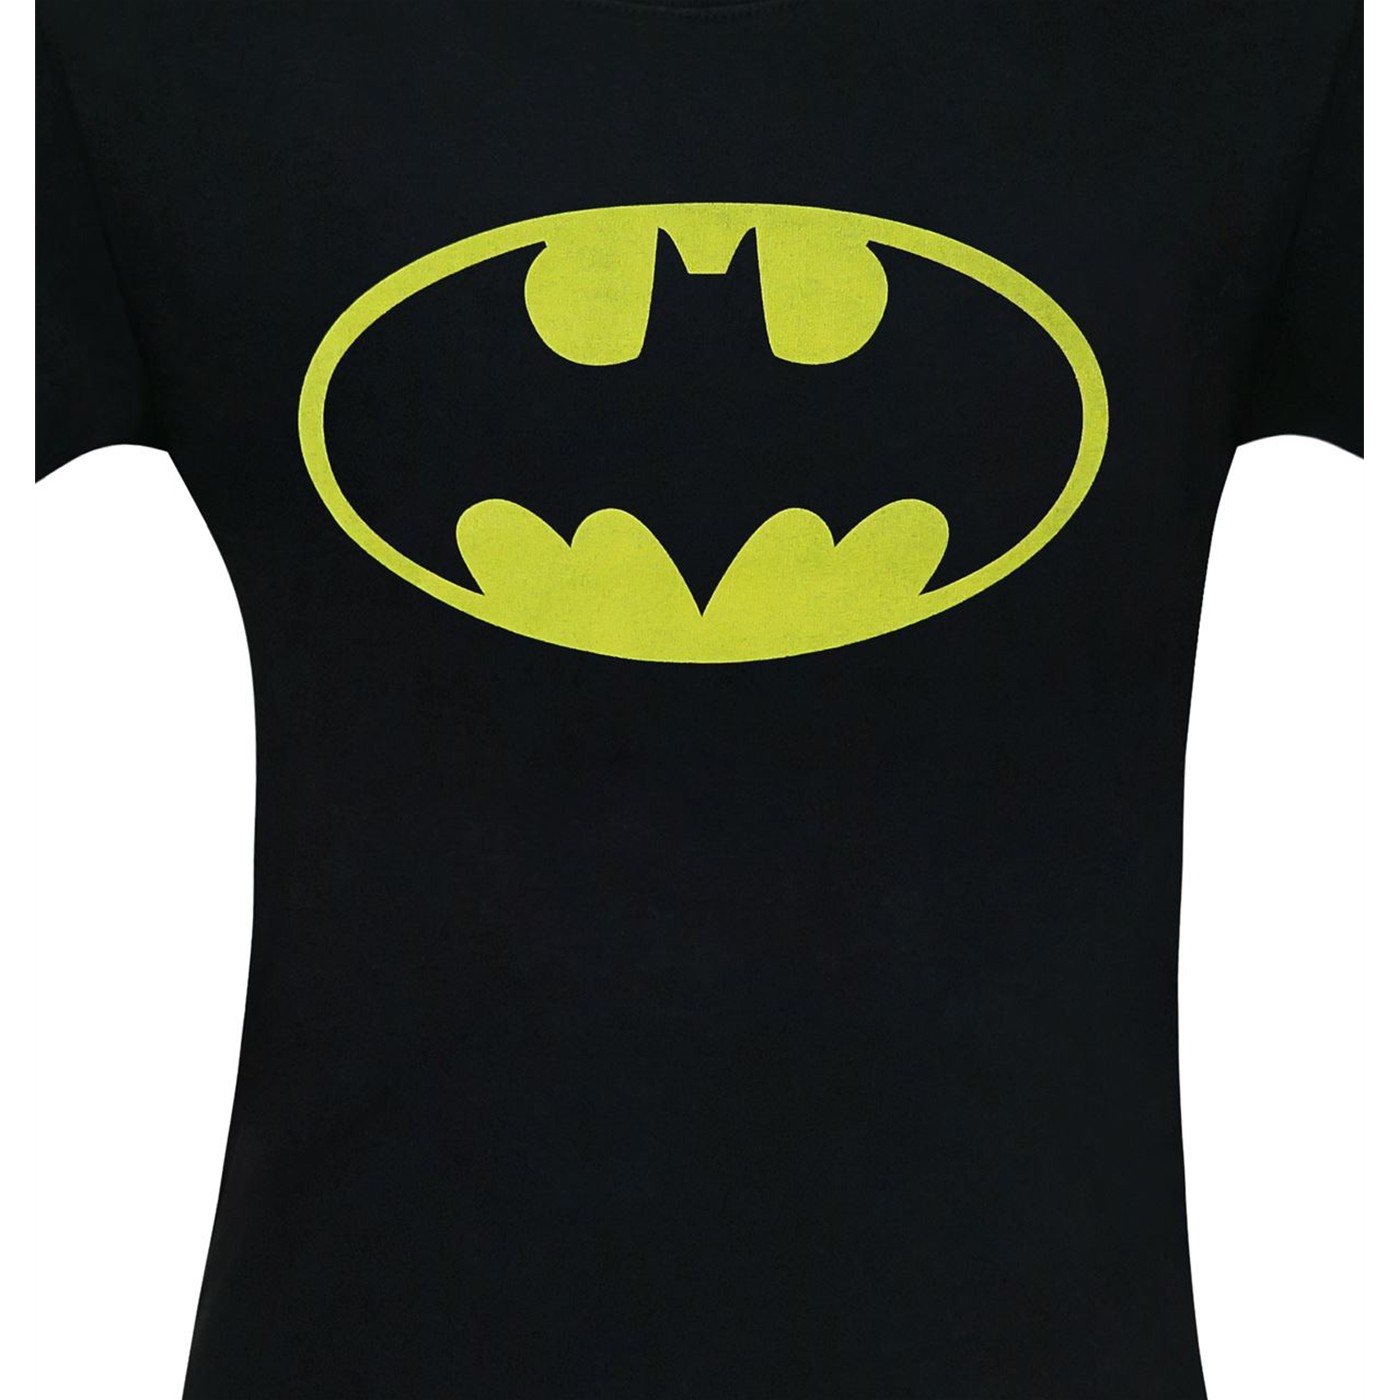 Batman Kids Symbol T-Shirt